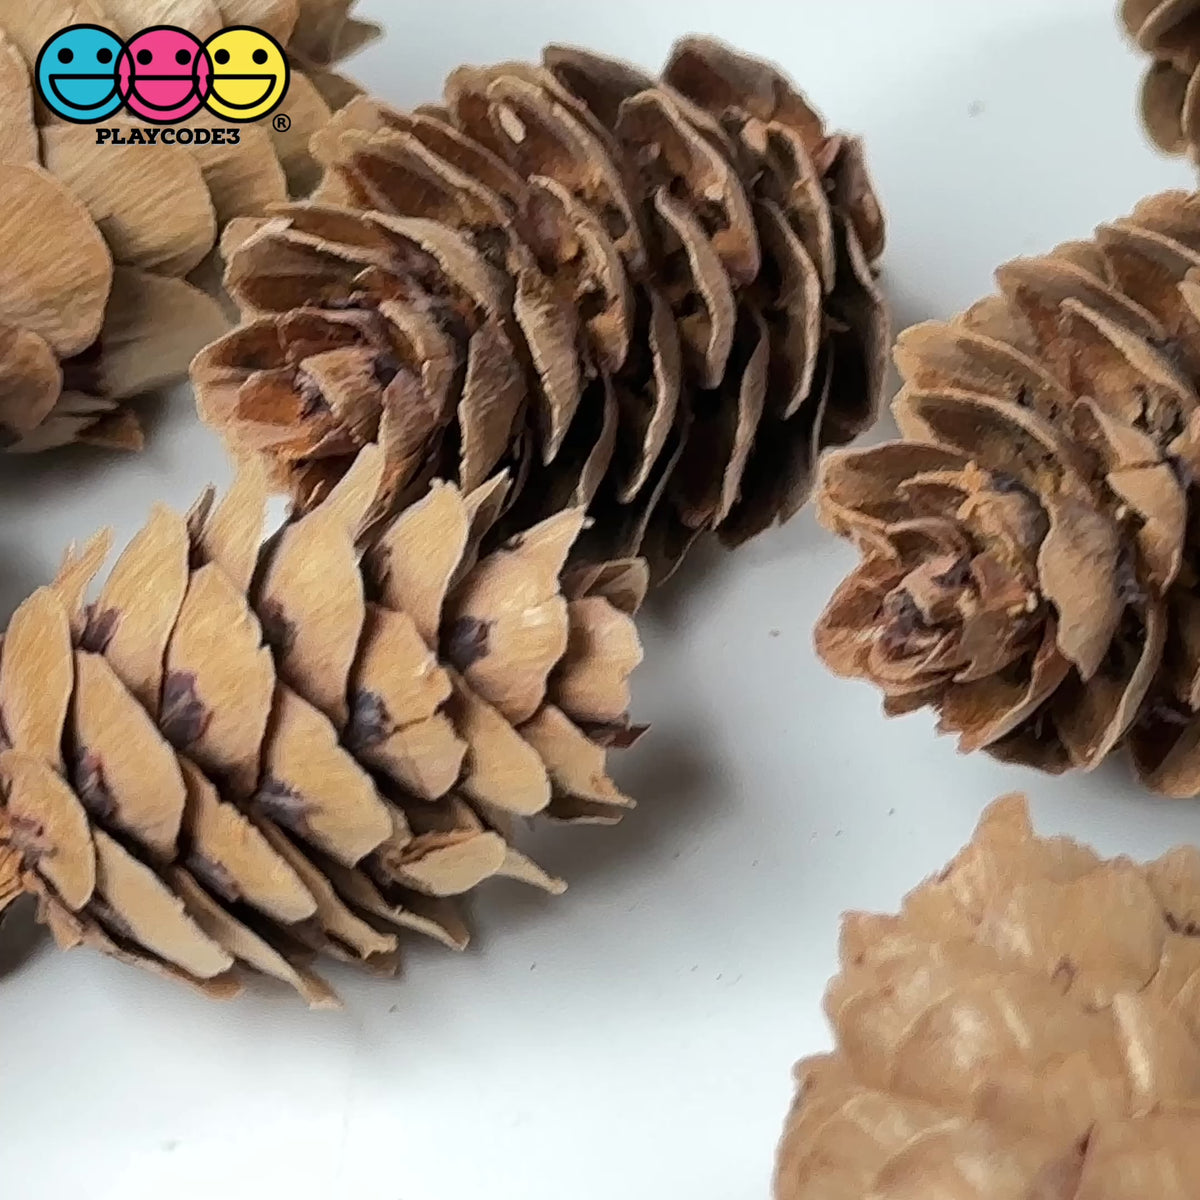 5pcs Hand Selected All Natural Premium Quality Brown Pine Cones